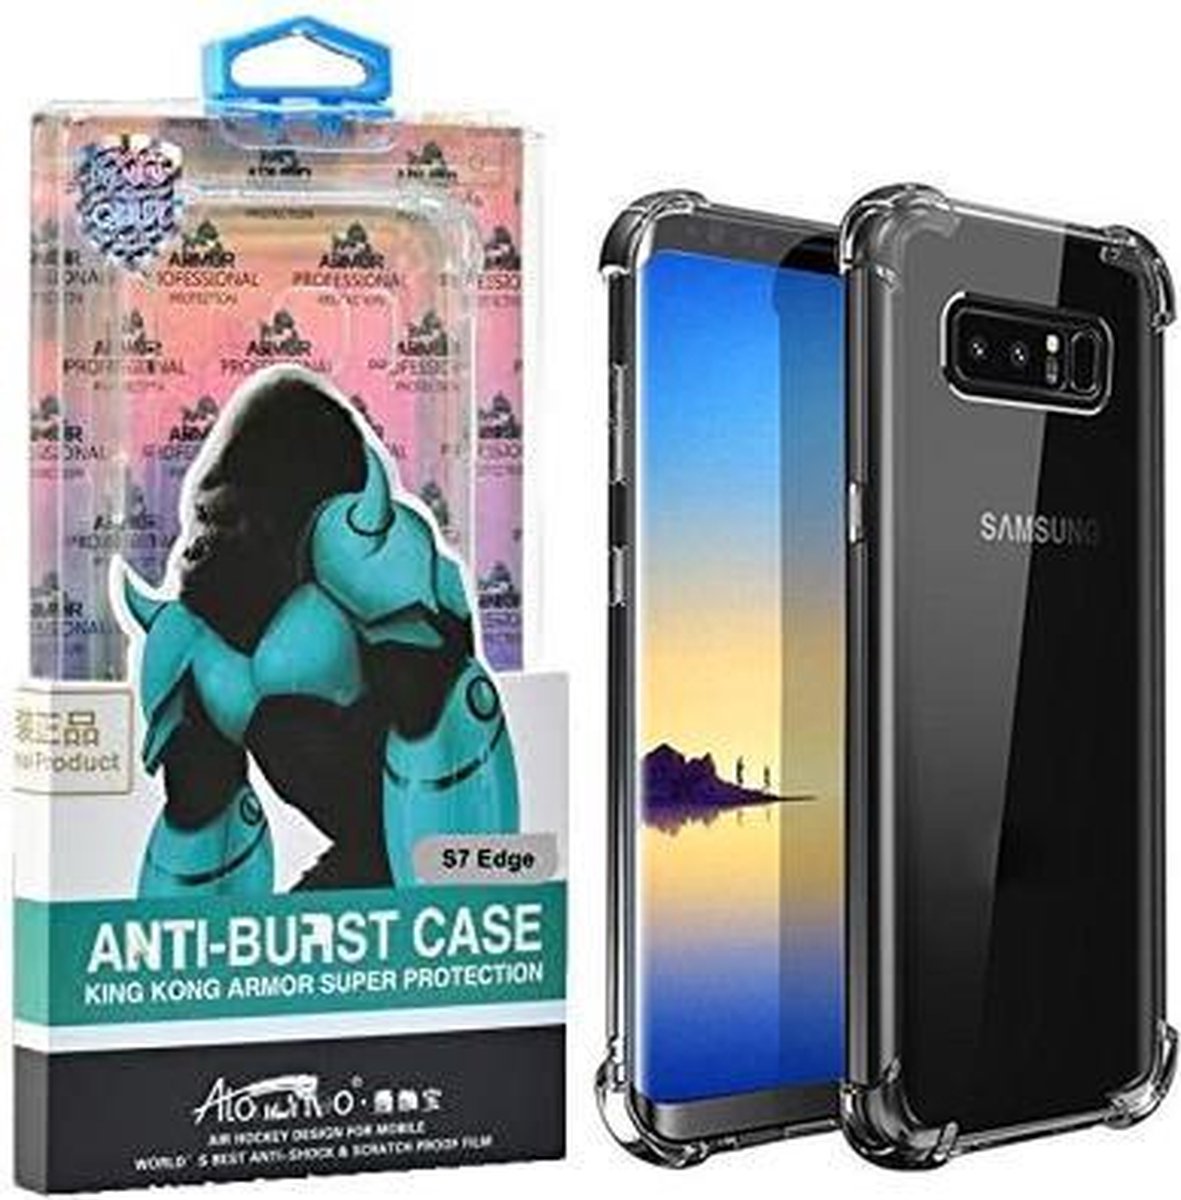 King Kong Armor - Anti-Burst Case voor Samsung Galaxy Note 8